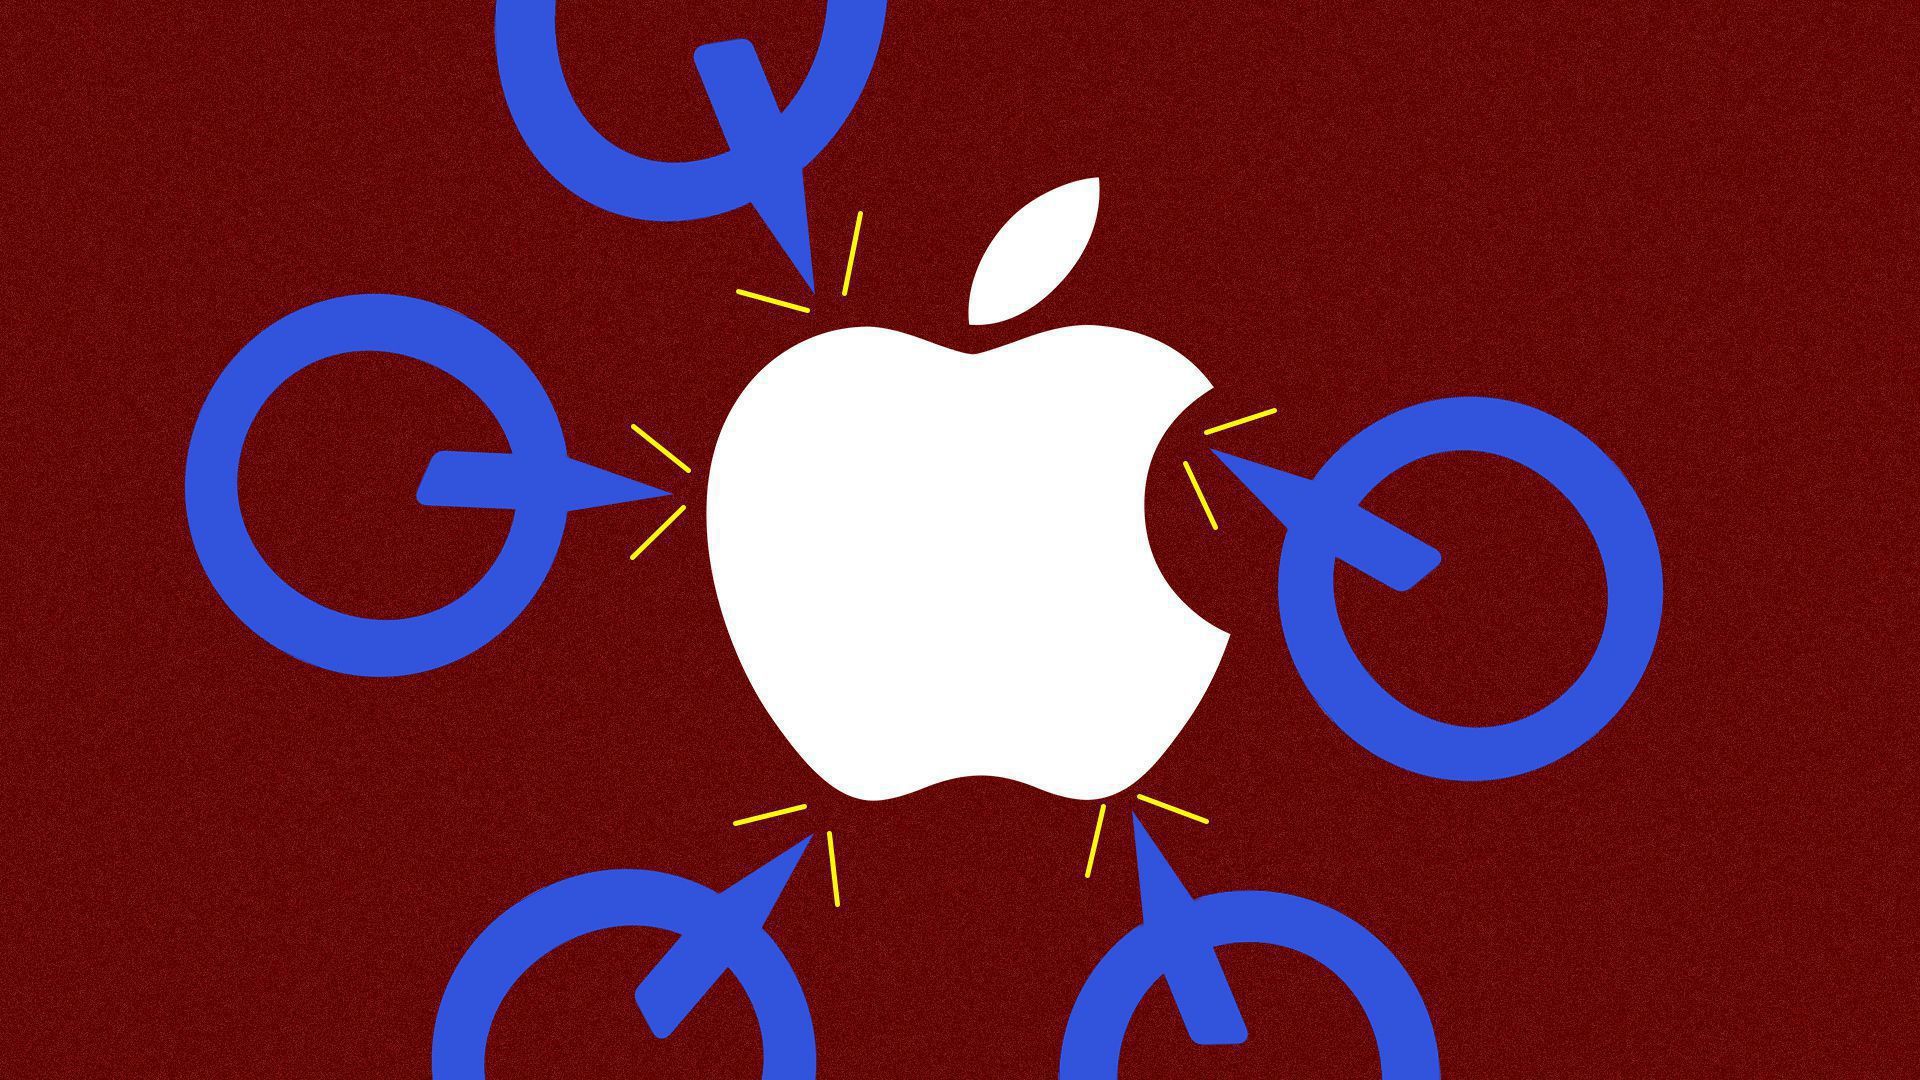 Illustration of Apple logo with Qualcomm logos